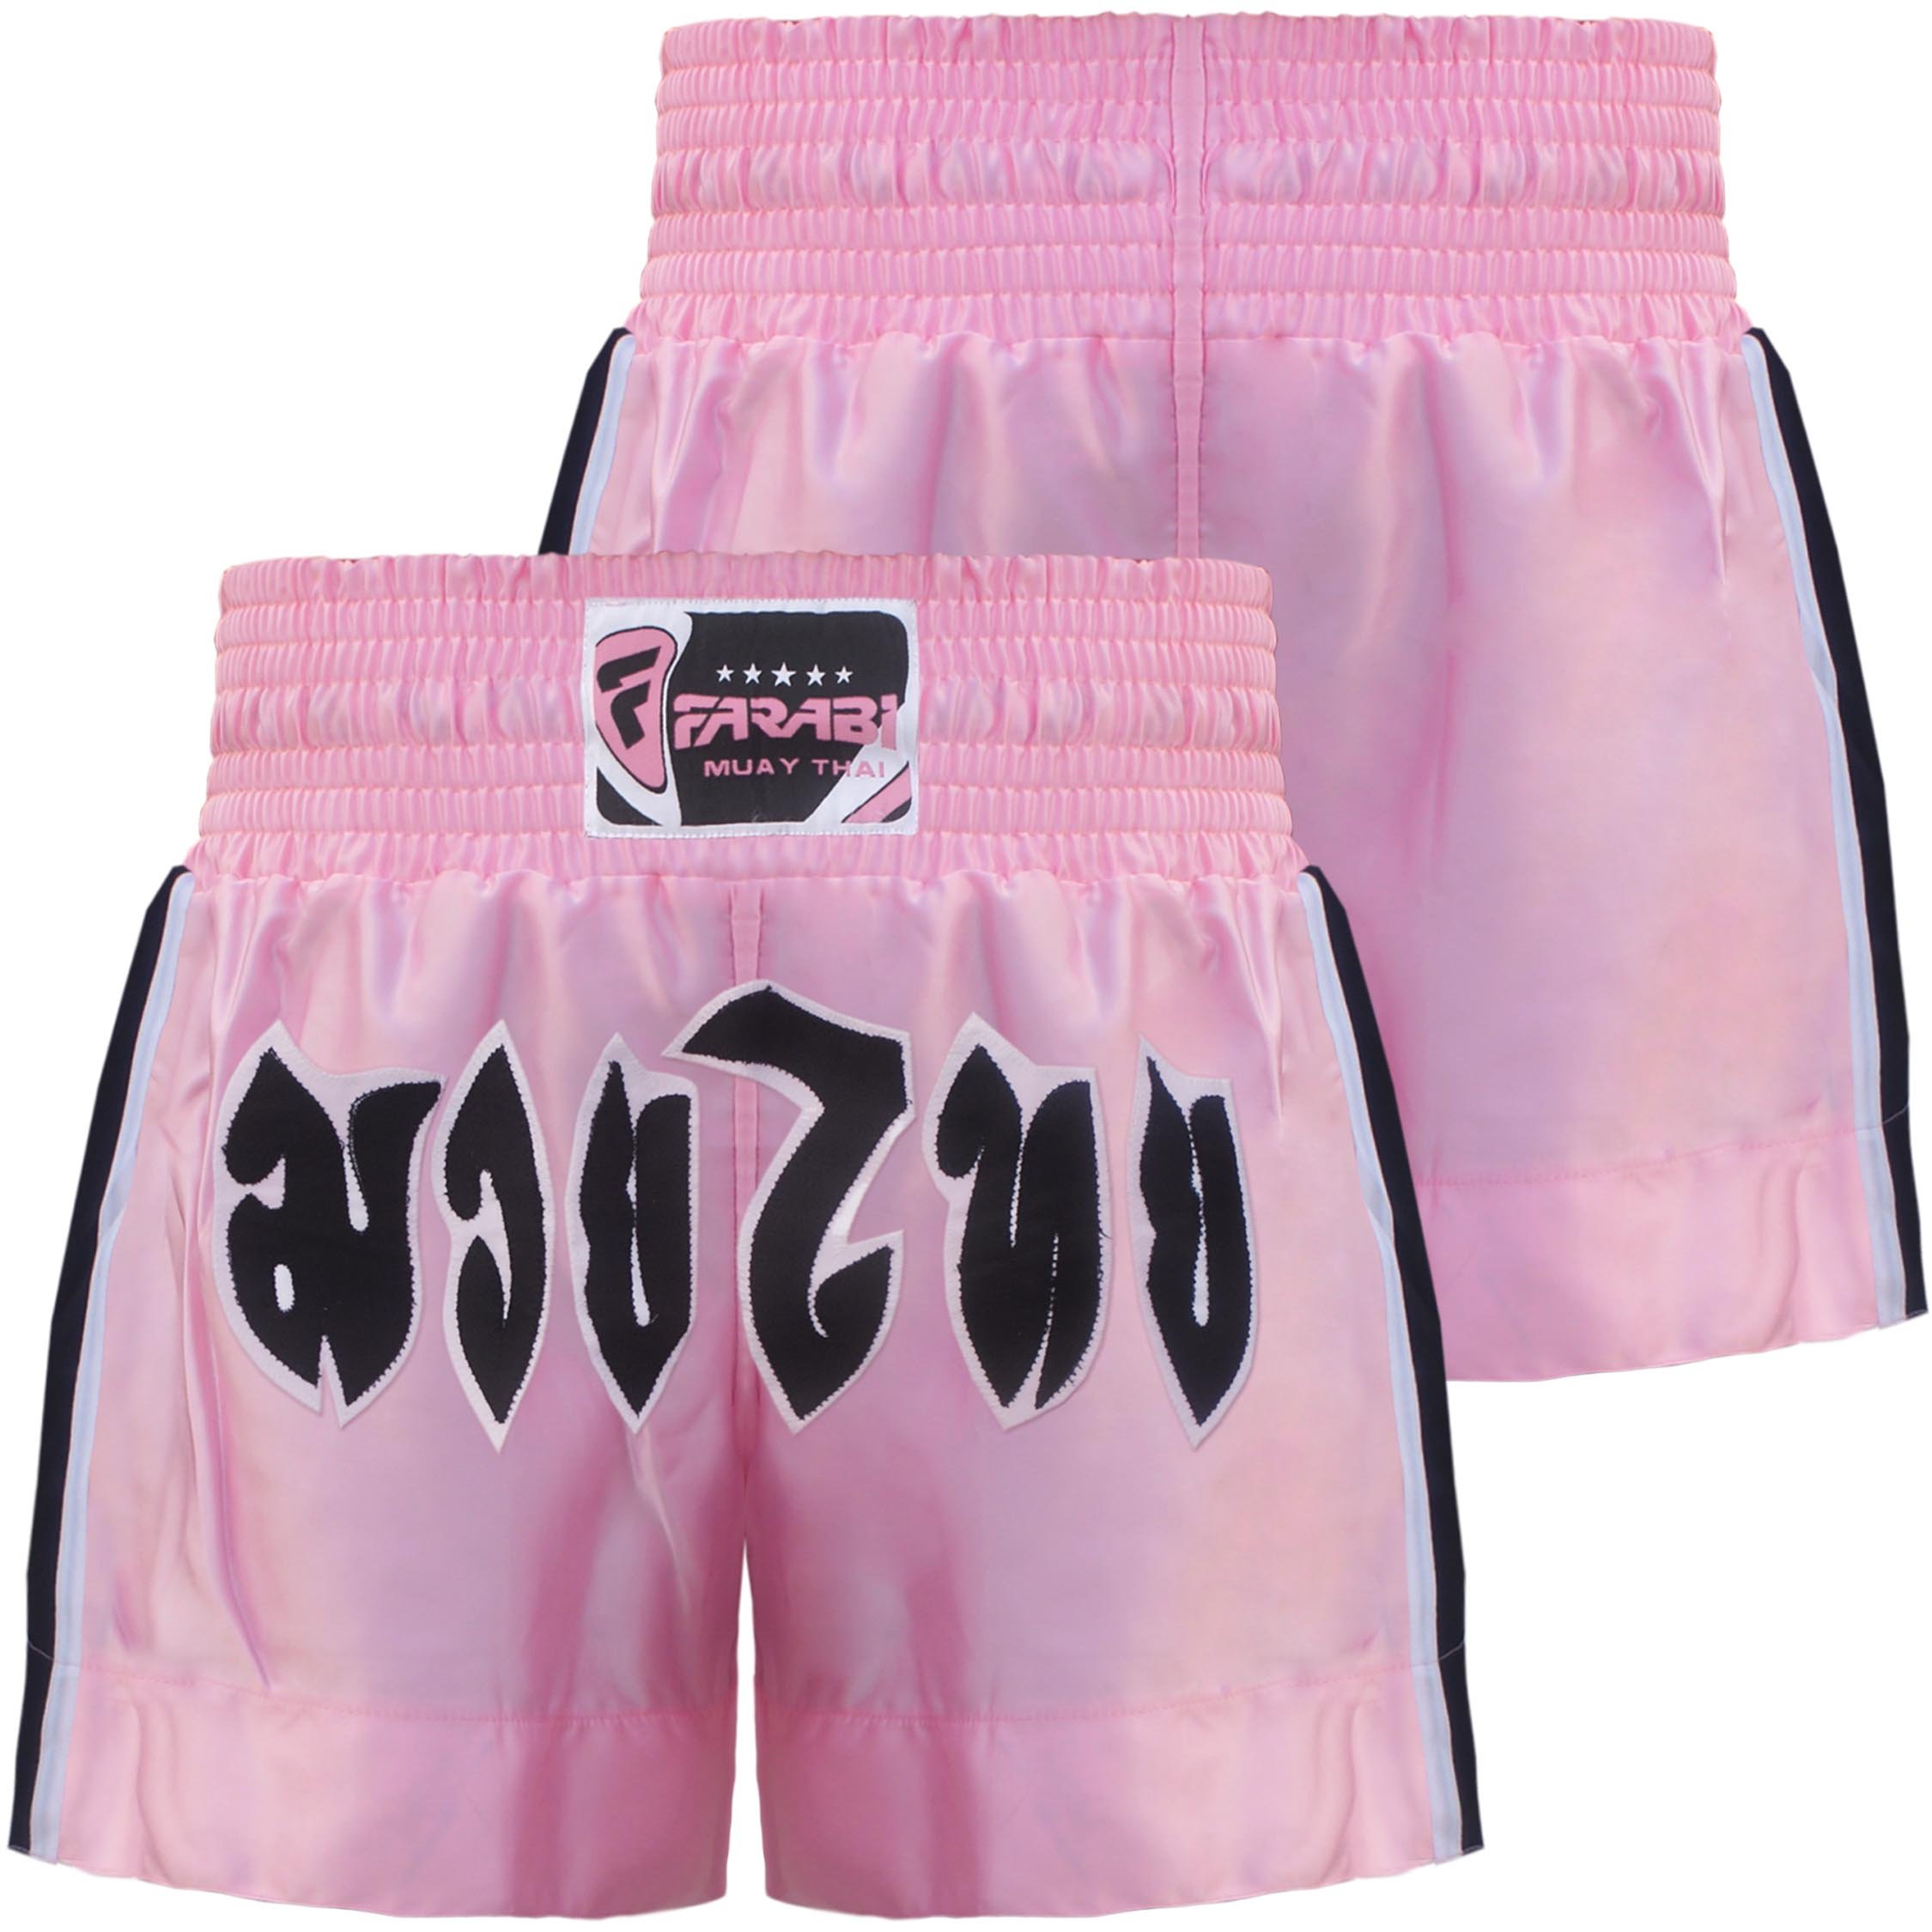 Farabi Sports Muay Thai Shorts - Training Short MMA Kampfsport Boxshorts (Pink, Large)